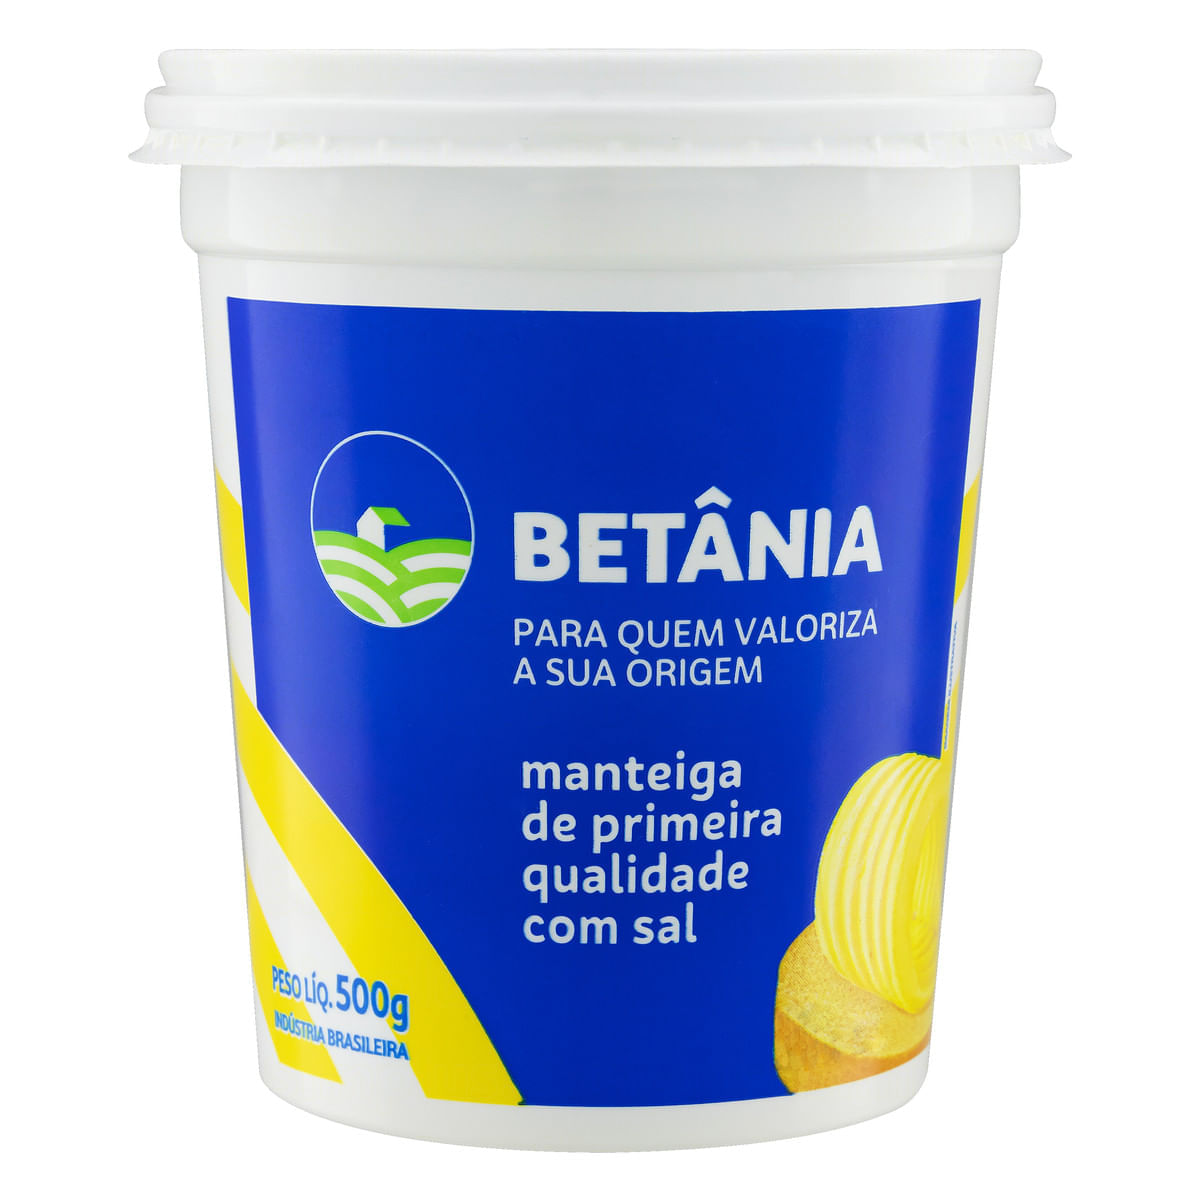 onabet cream uses in kannada